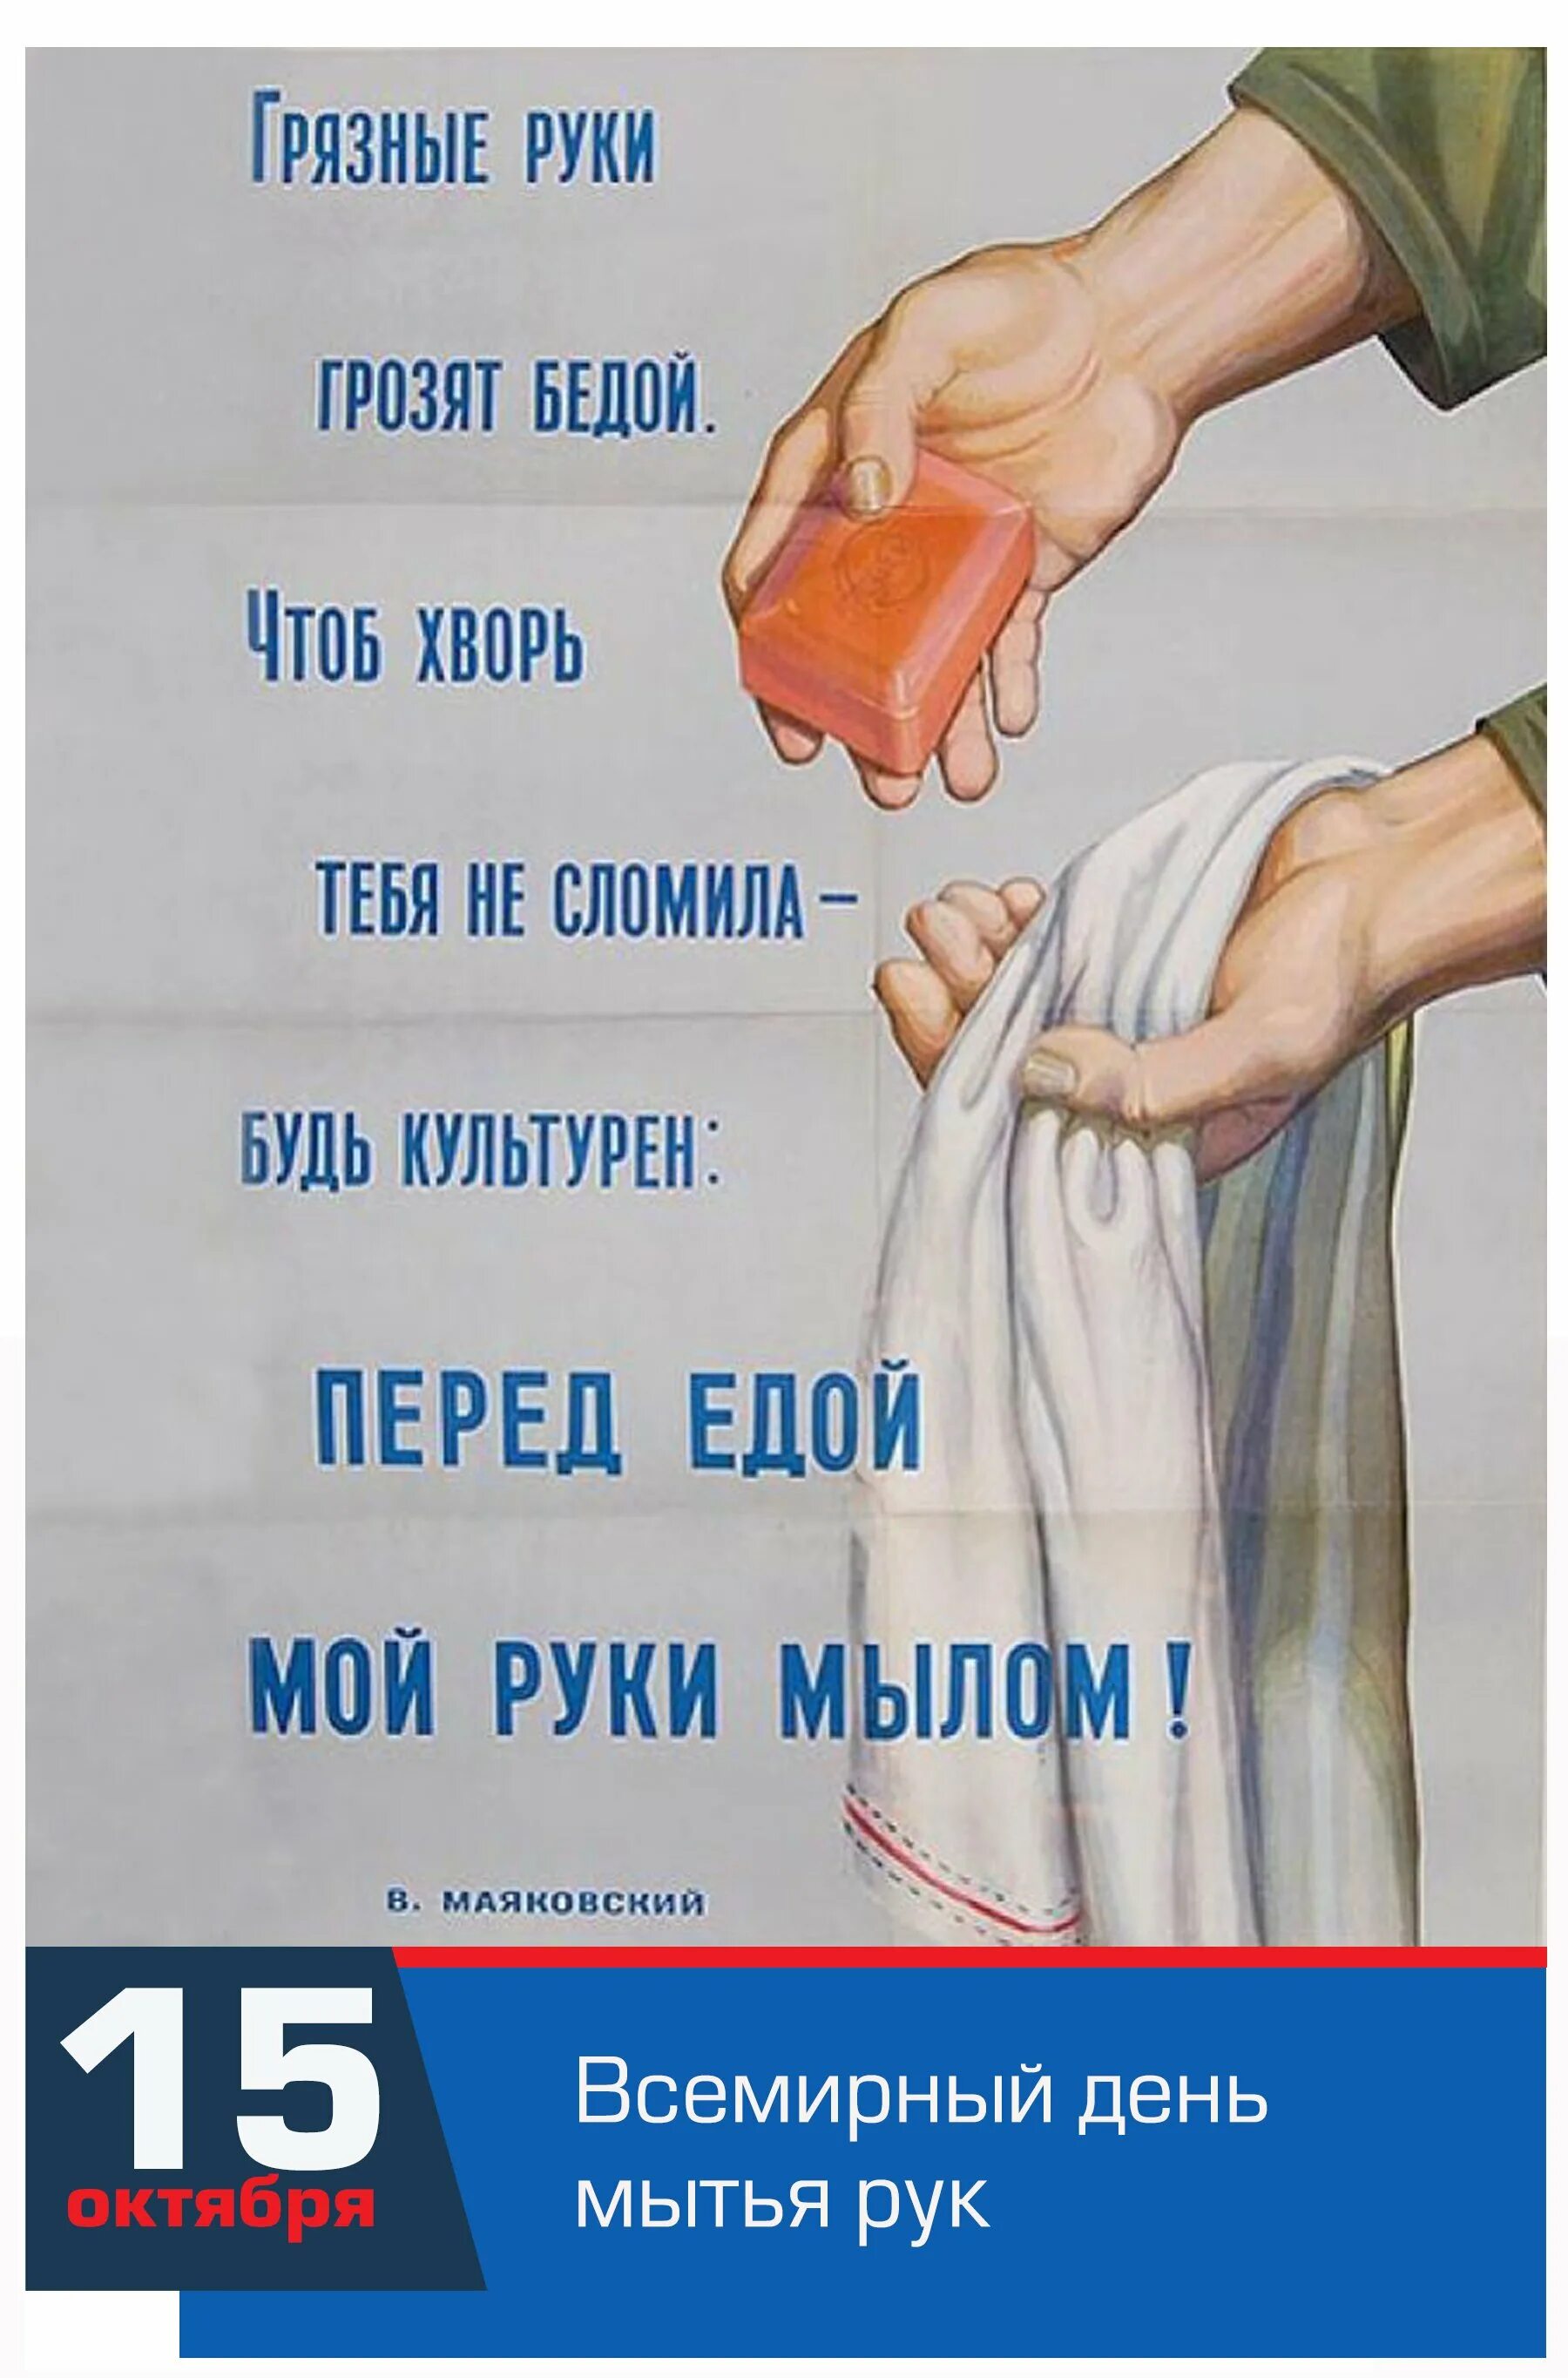 Грозит беда. Грязные руки плакат. Советские плакаты мойте руки. Грязные руки грозят бедой плакат. Мойте руки перед едой плакат СССР.